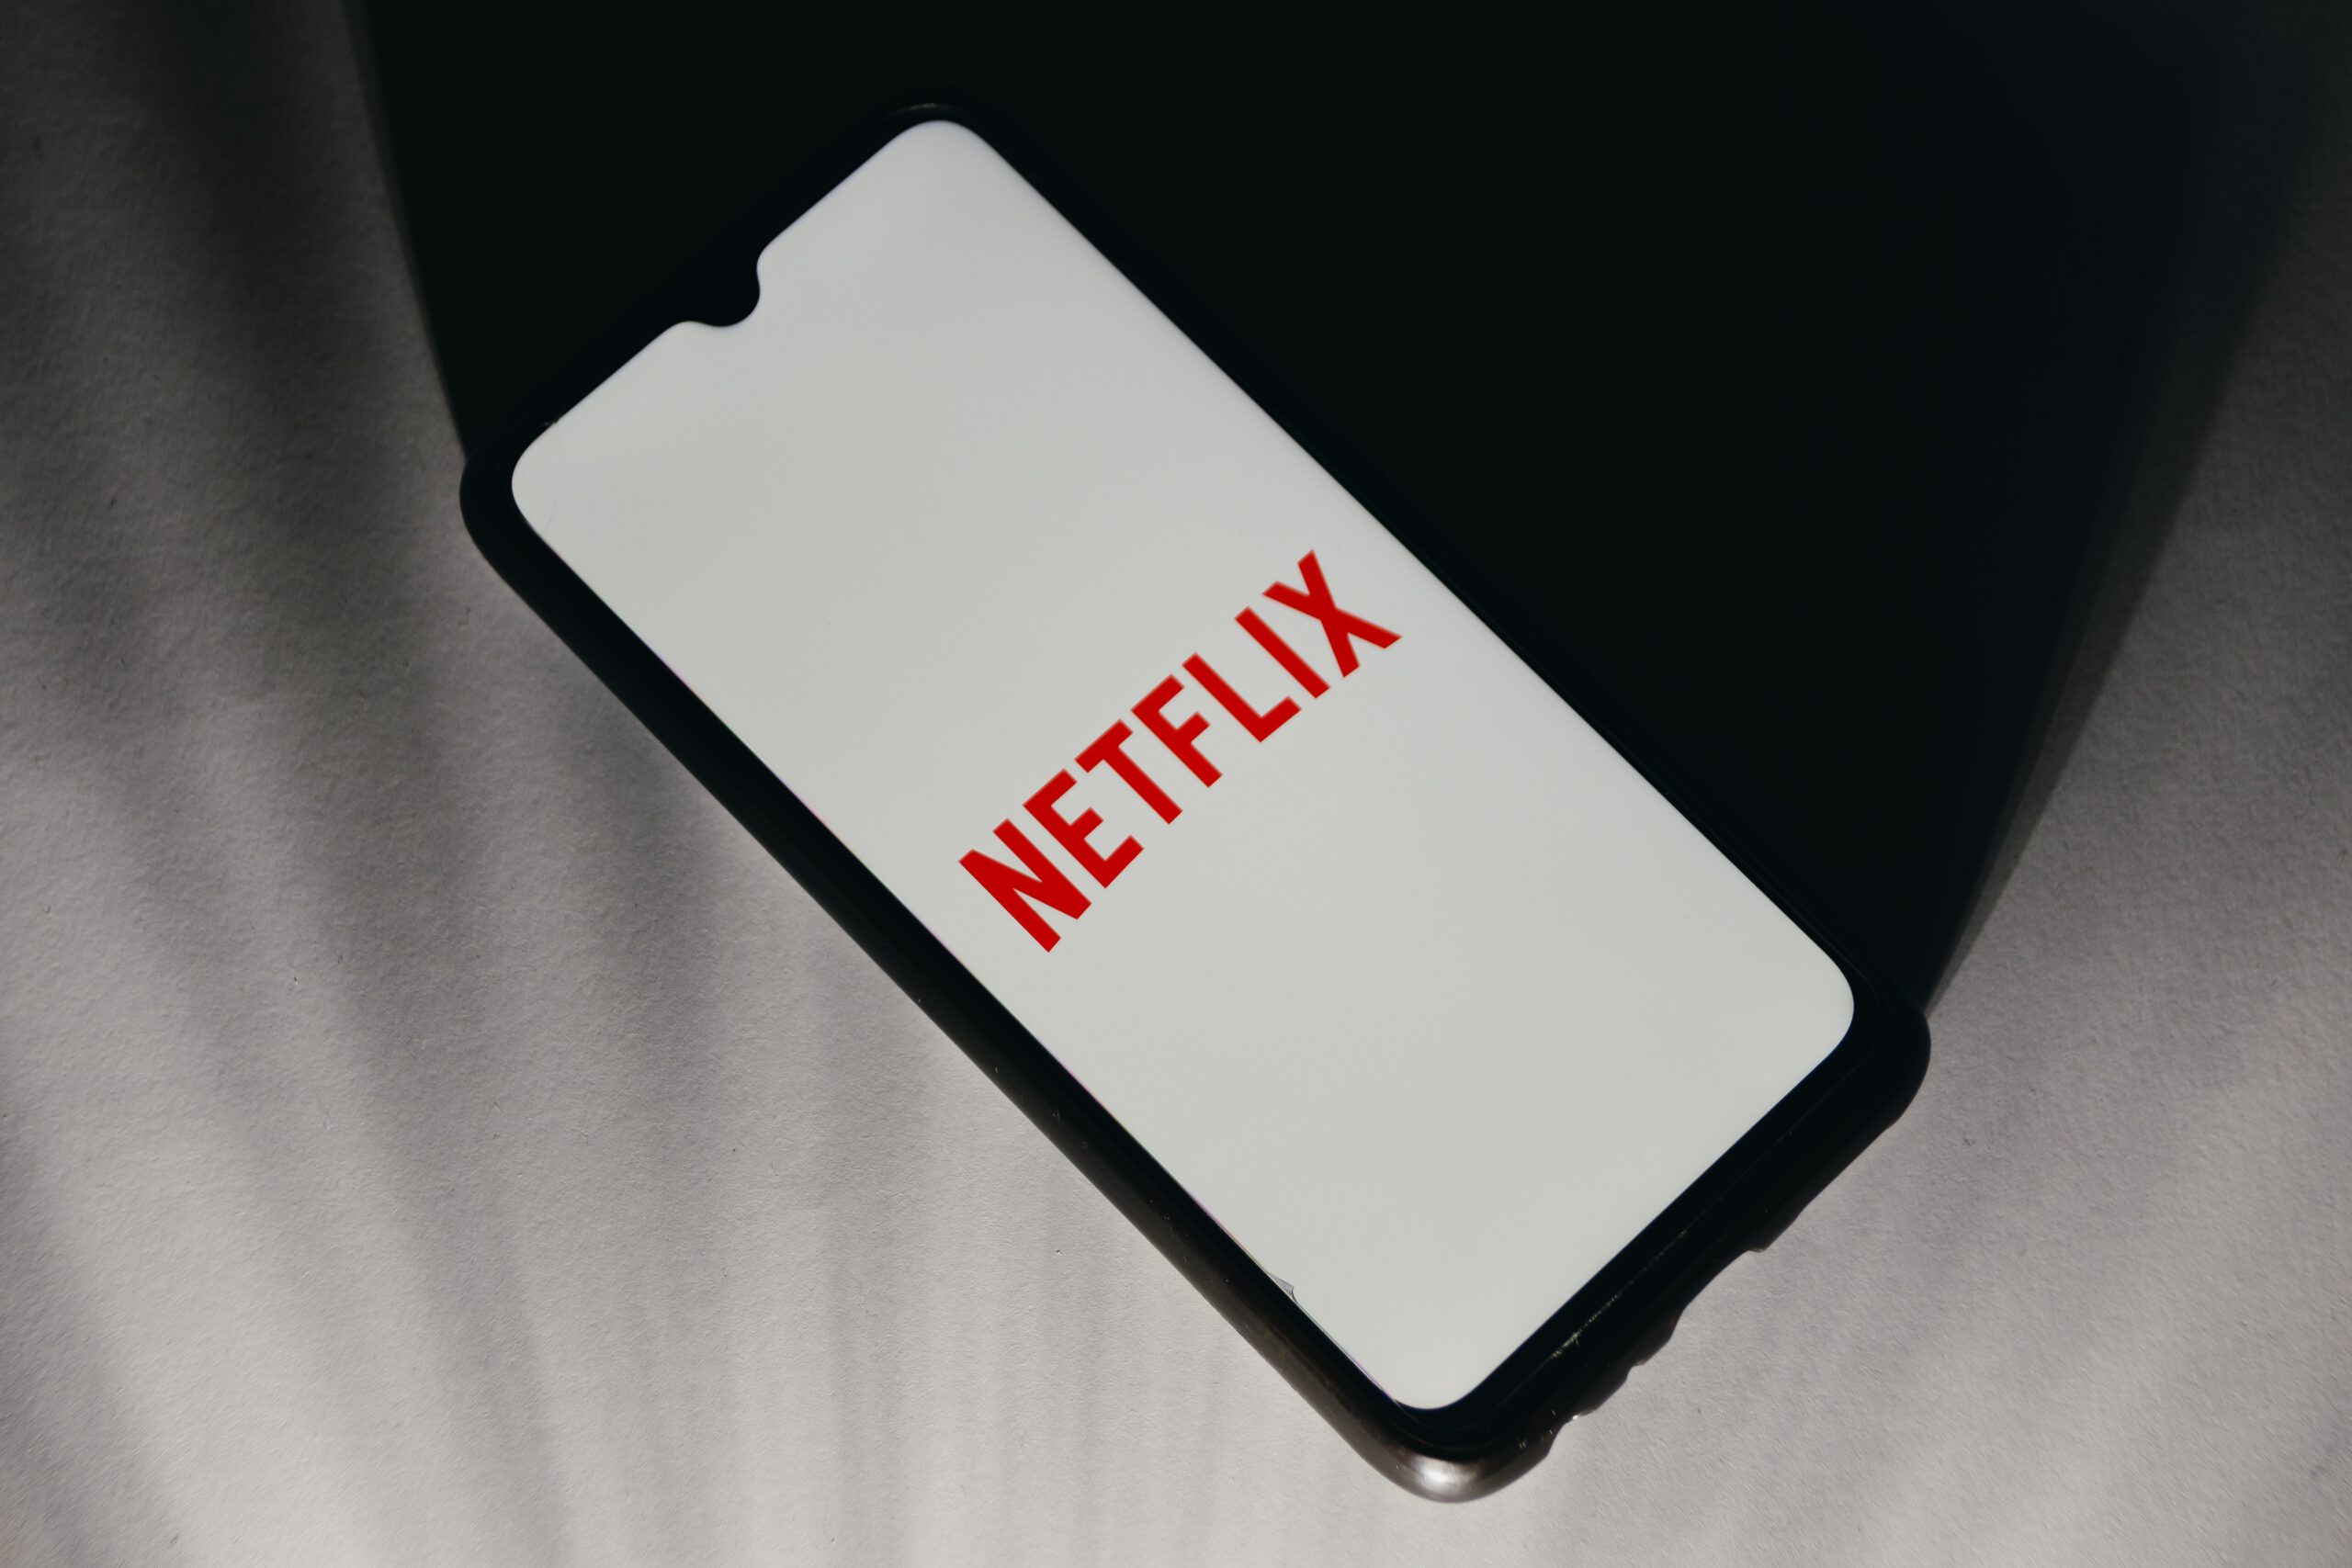 A phone screen displaying the Netflix logo.